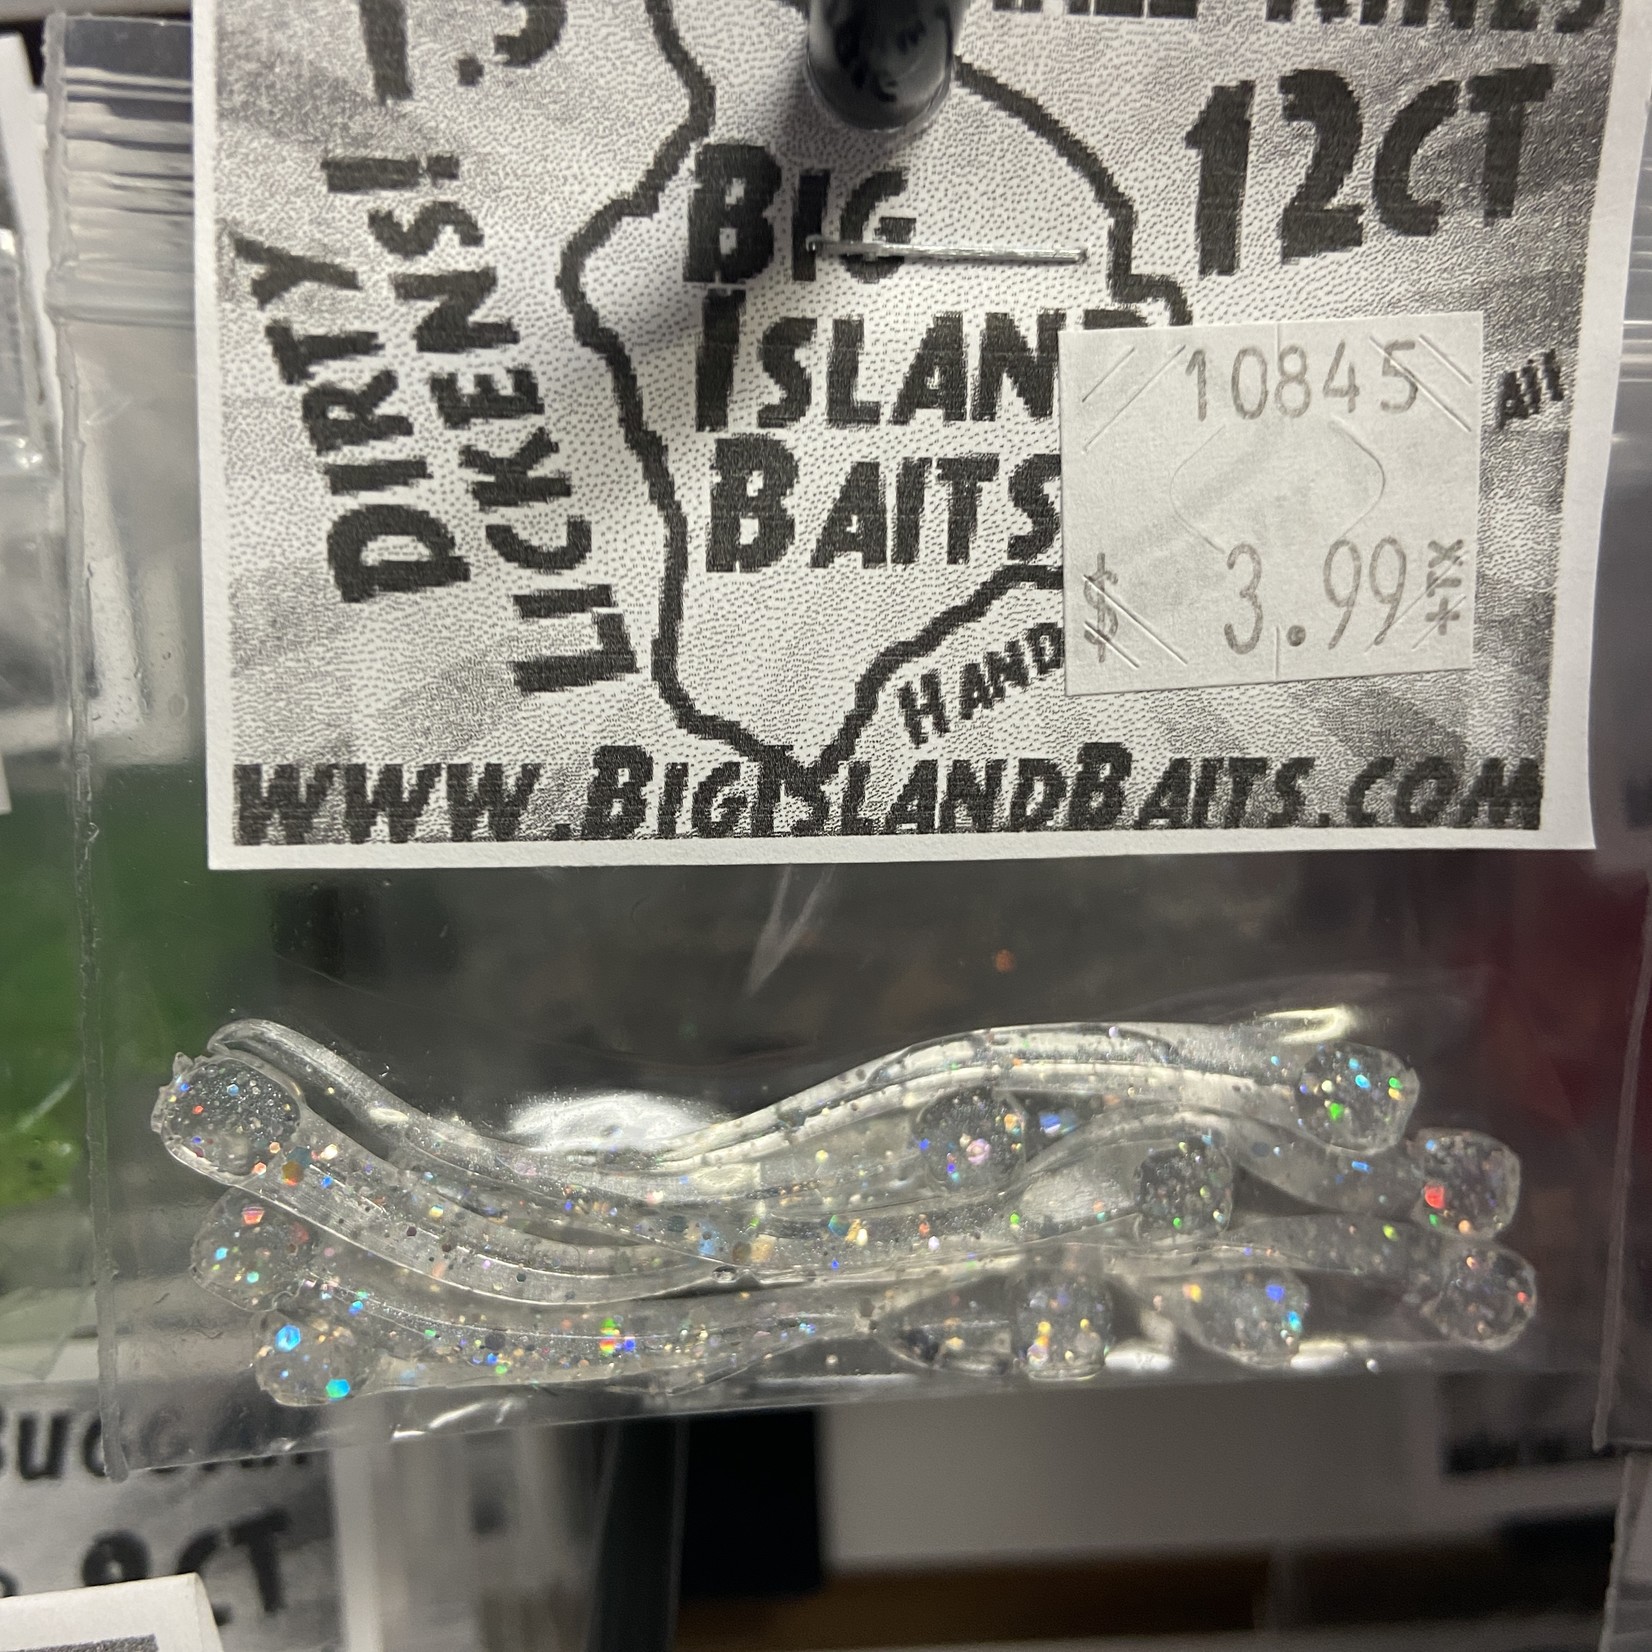 Big Island Baits